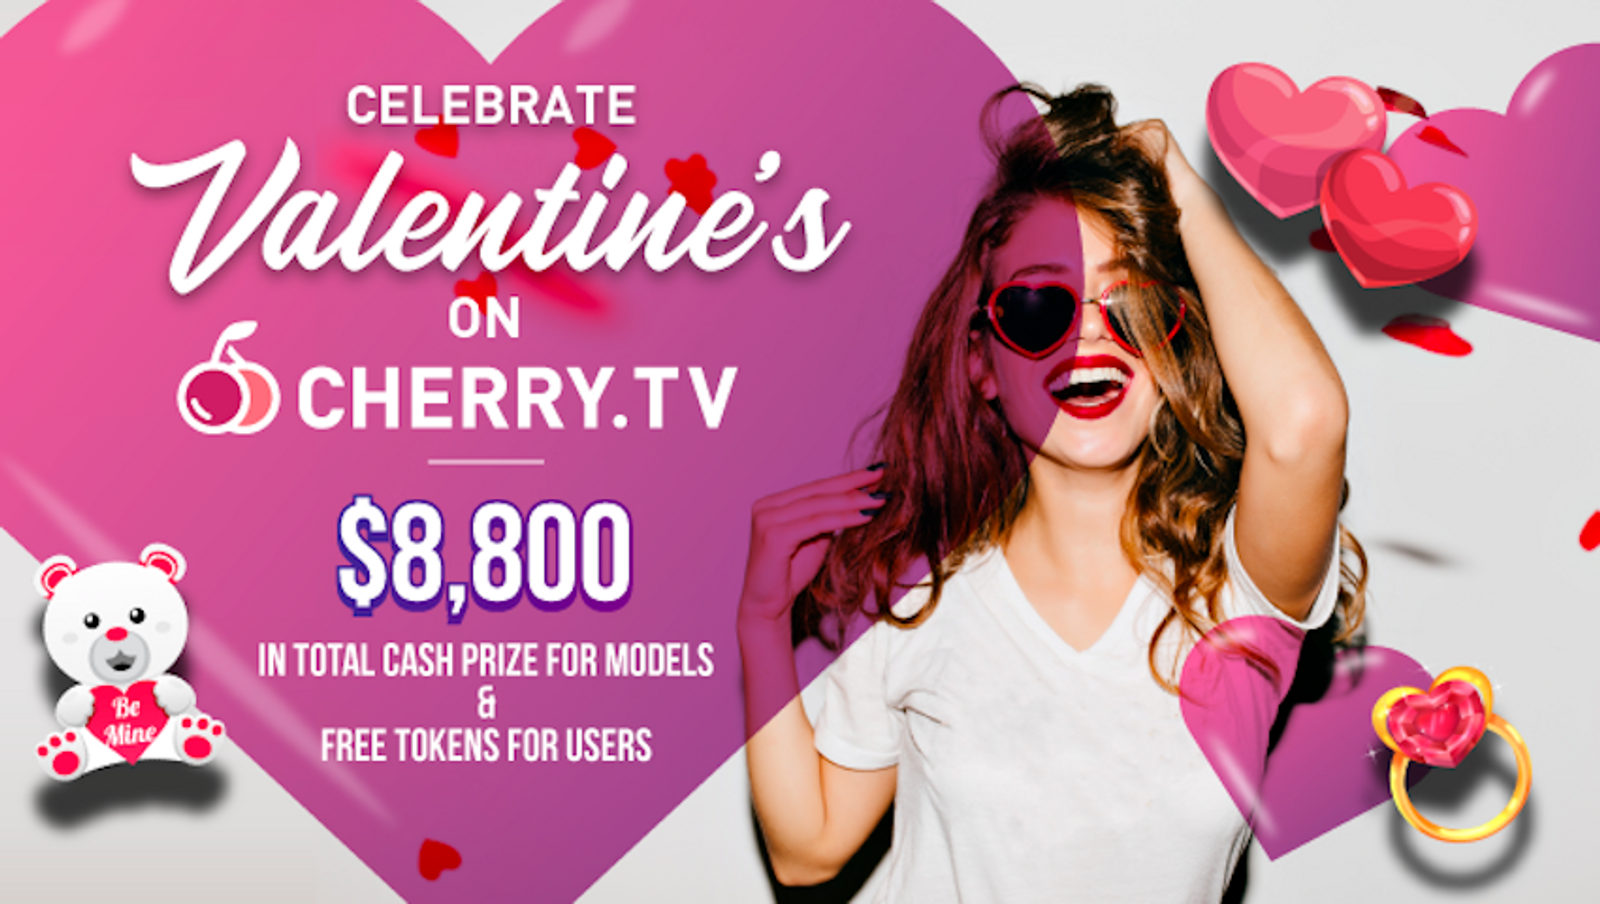 Cherry.tv’s Valentine’s Day Promotion Sends ‘Hearts’ Aflutter